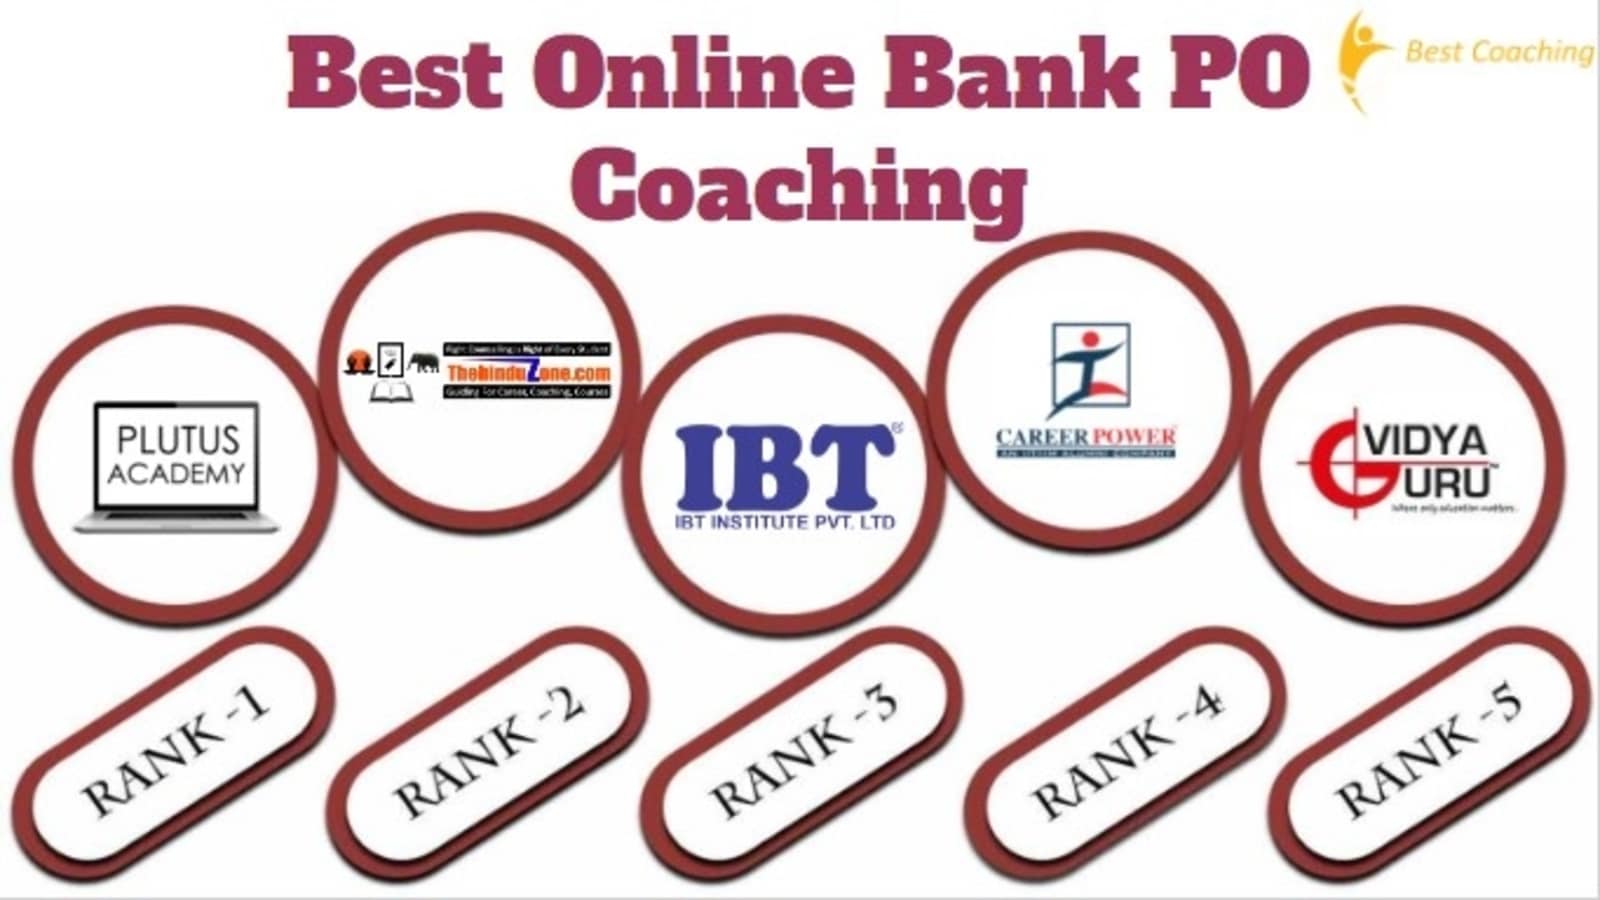 Best Online Bank PO Coaching